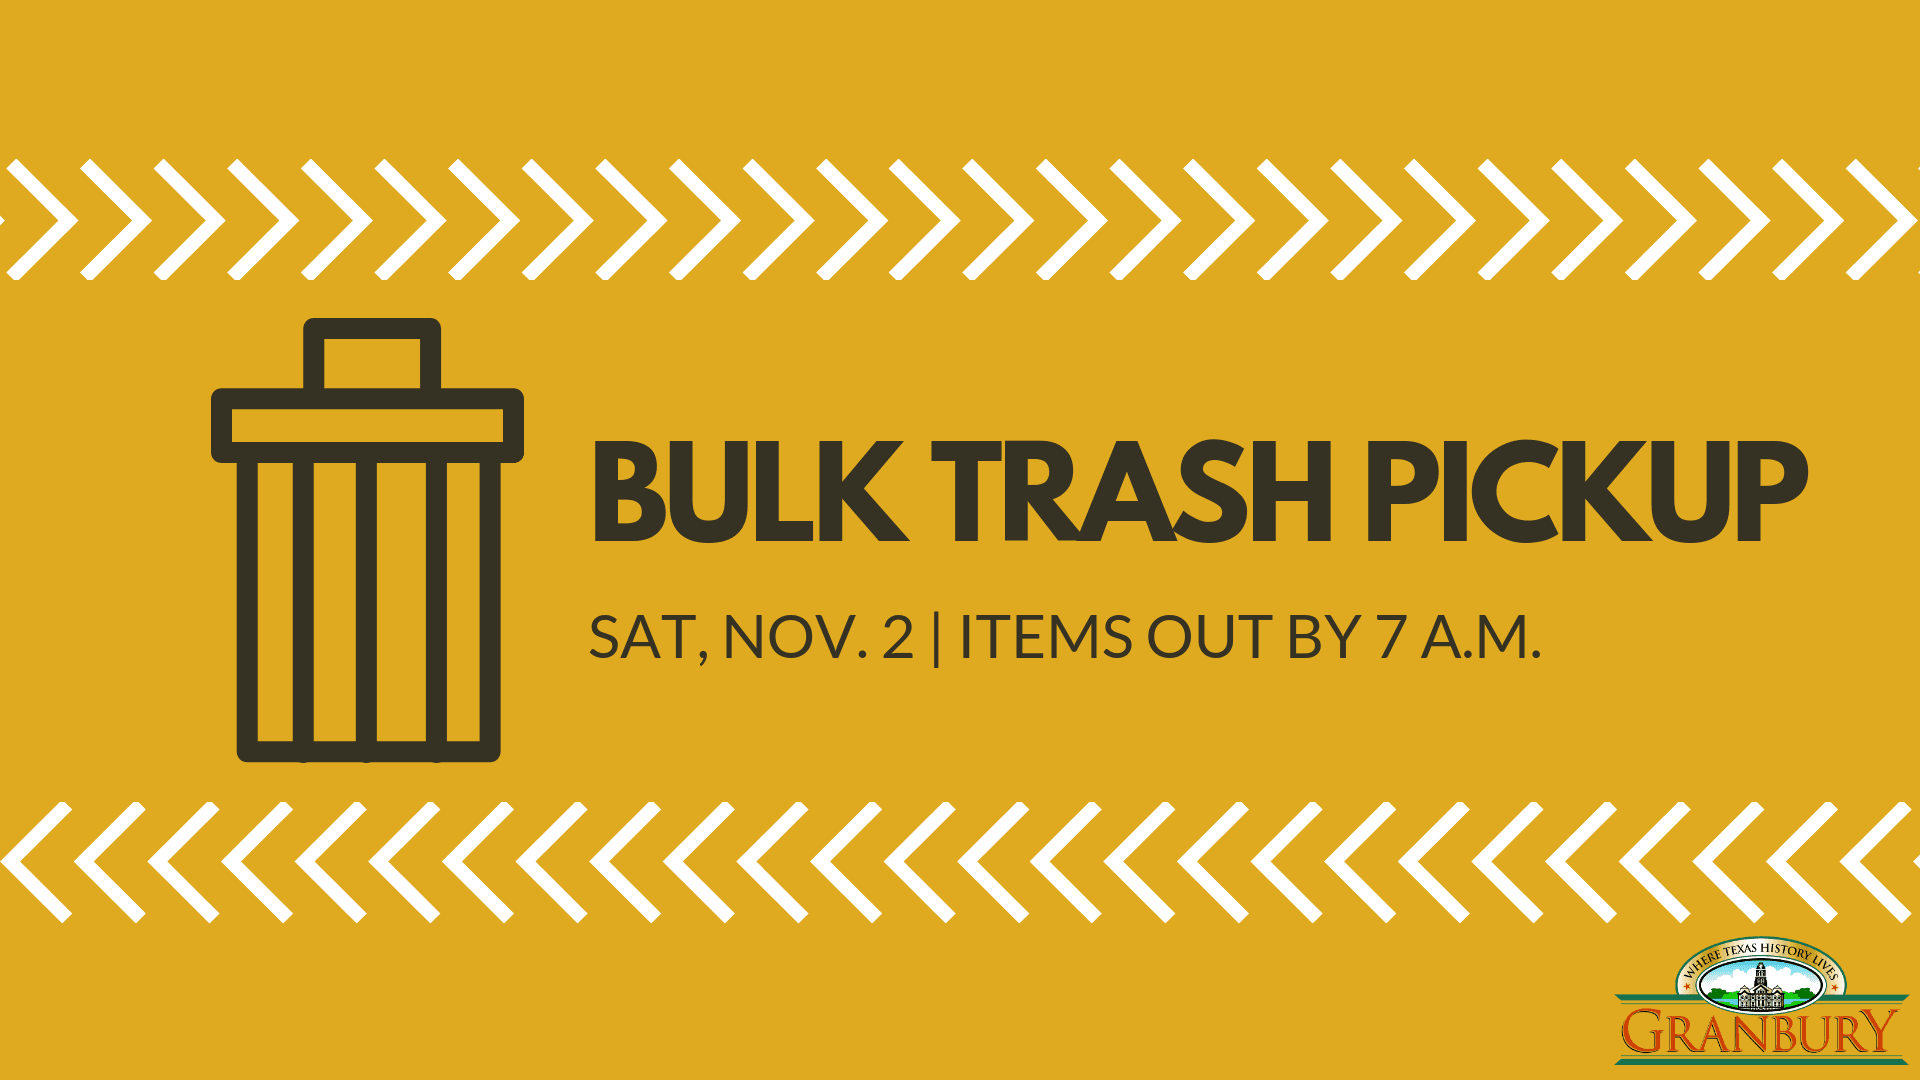 Resident Bulk Trash Pick-Up on Saturday, November 2